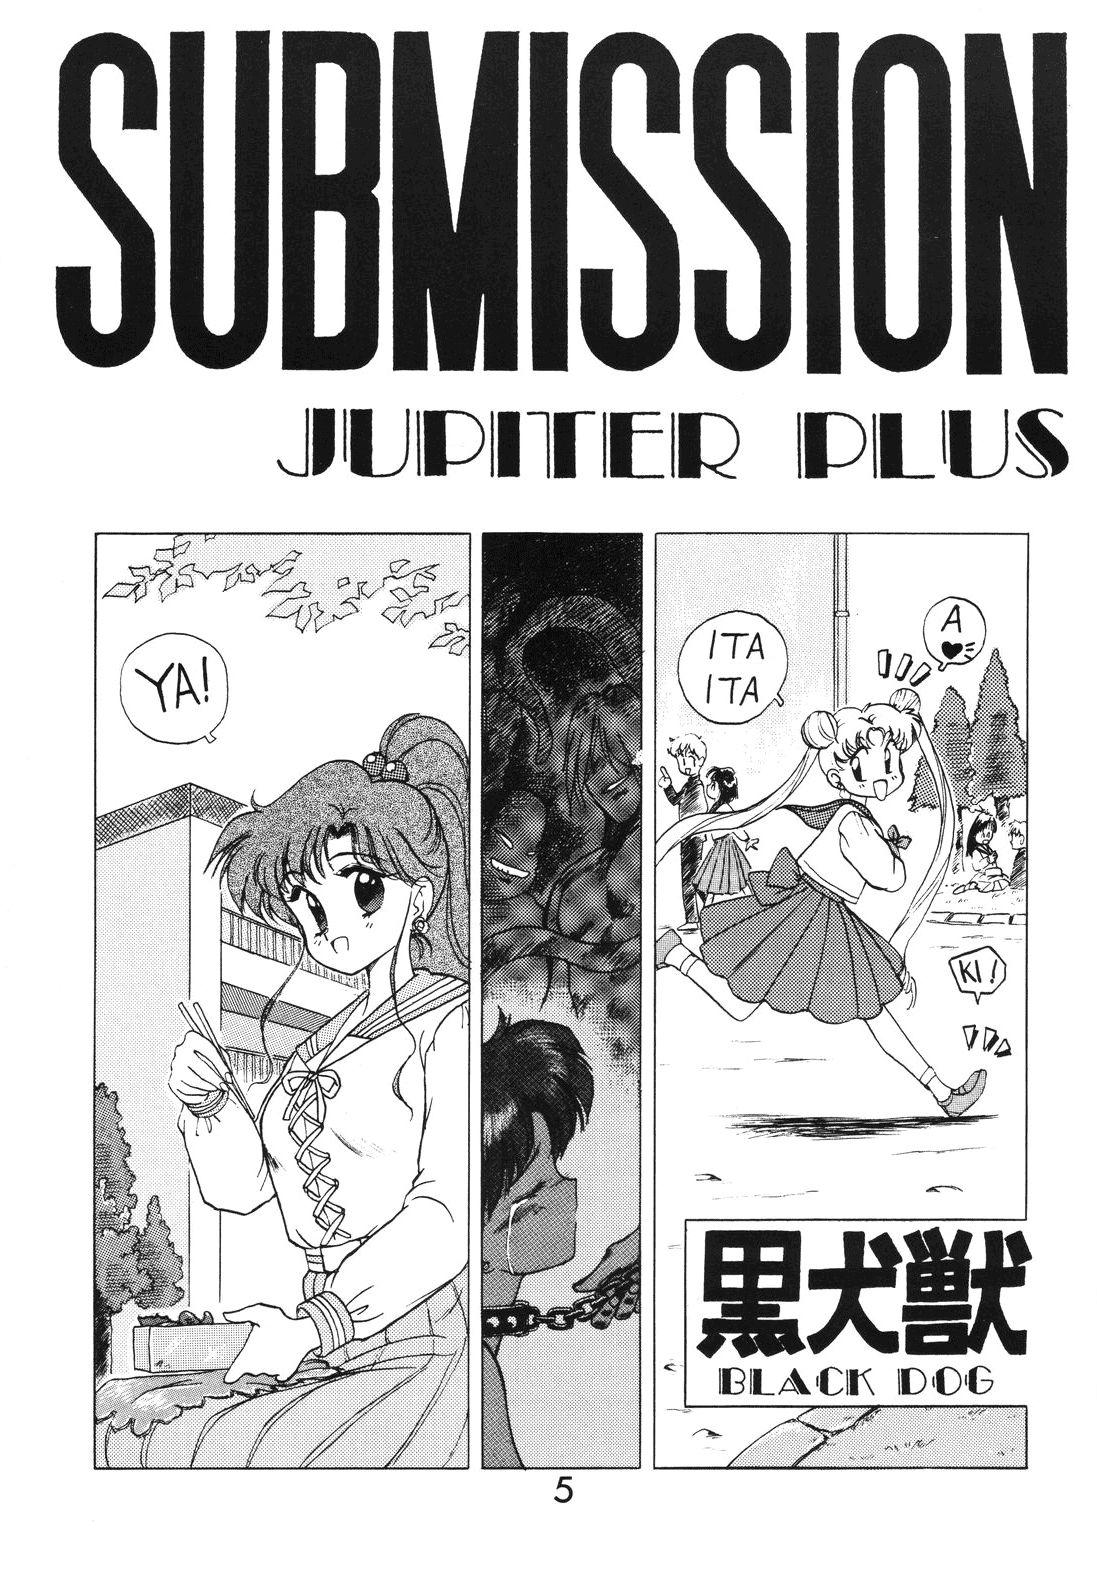 Scissoring SUBMISSION JUPITER PLUS - Sailor moon Amateursex - Page 5